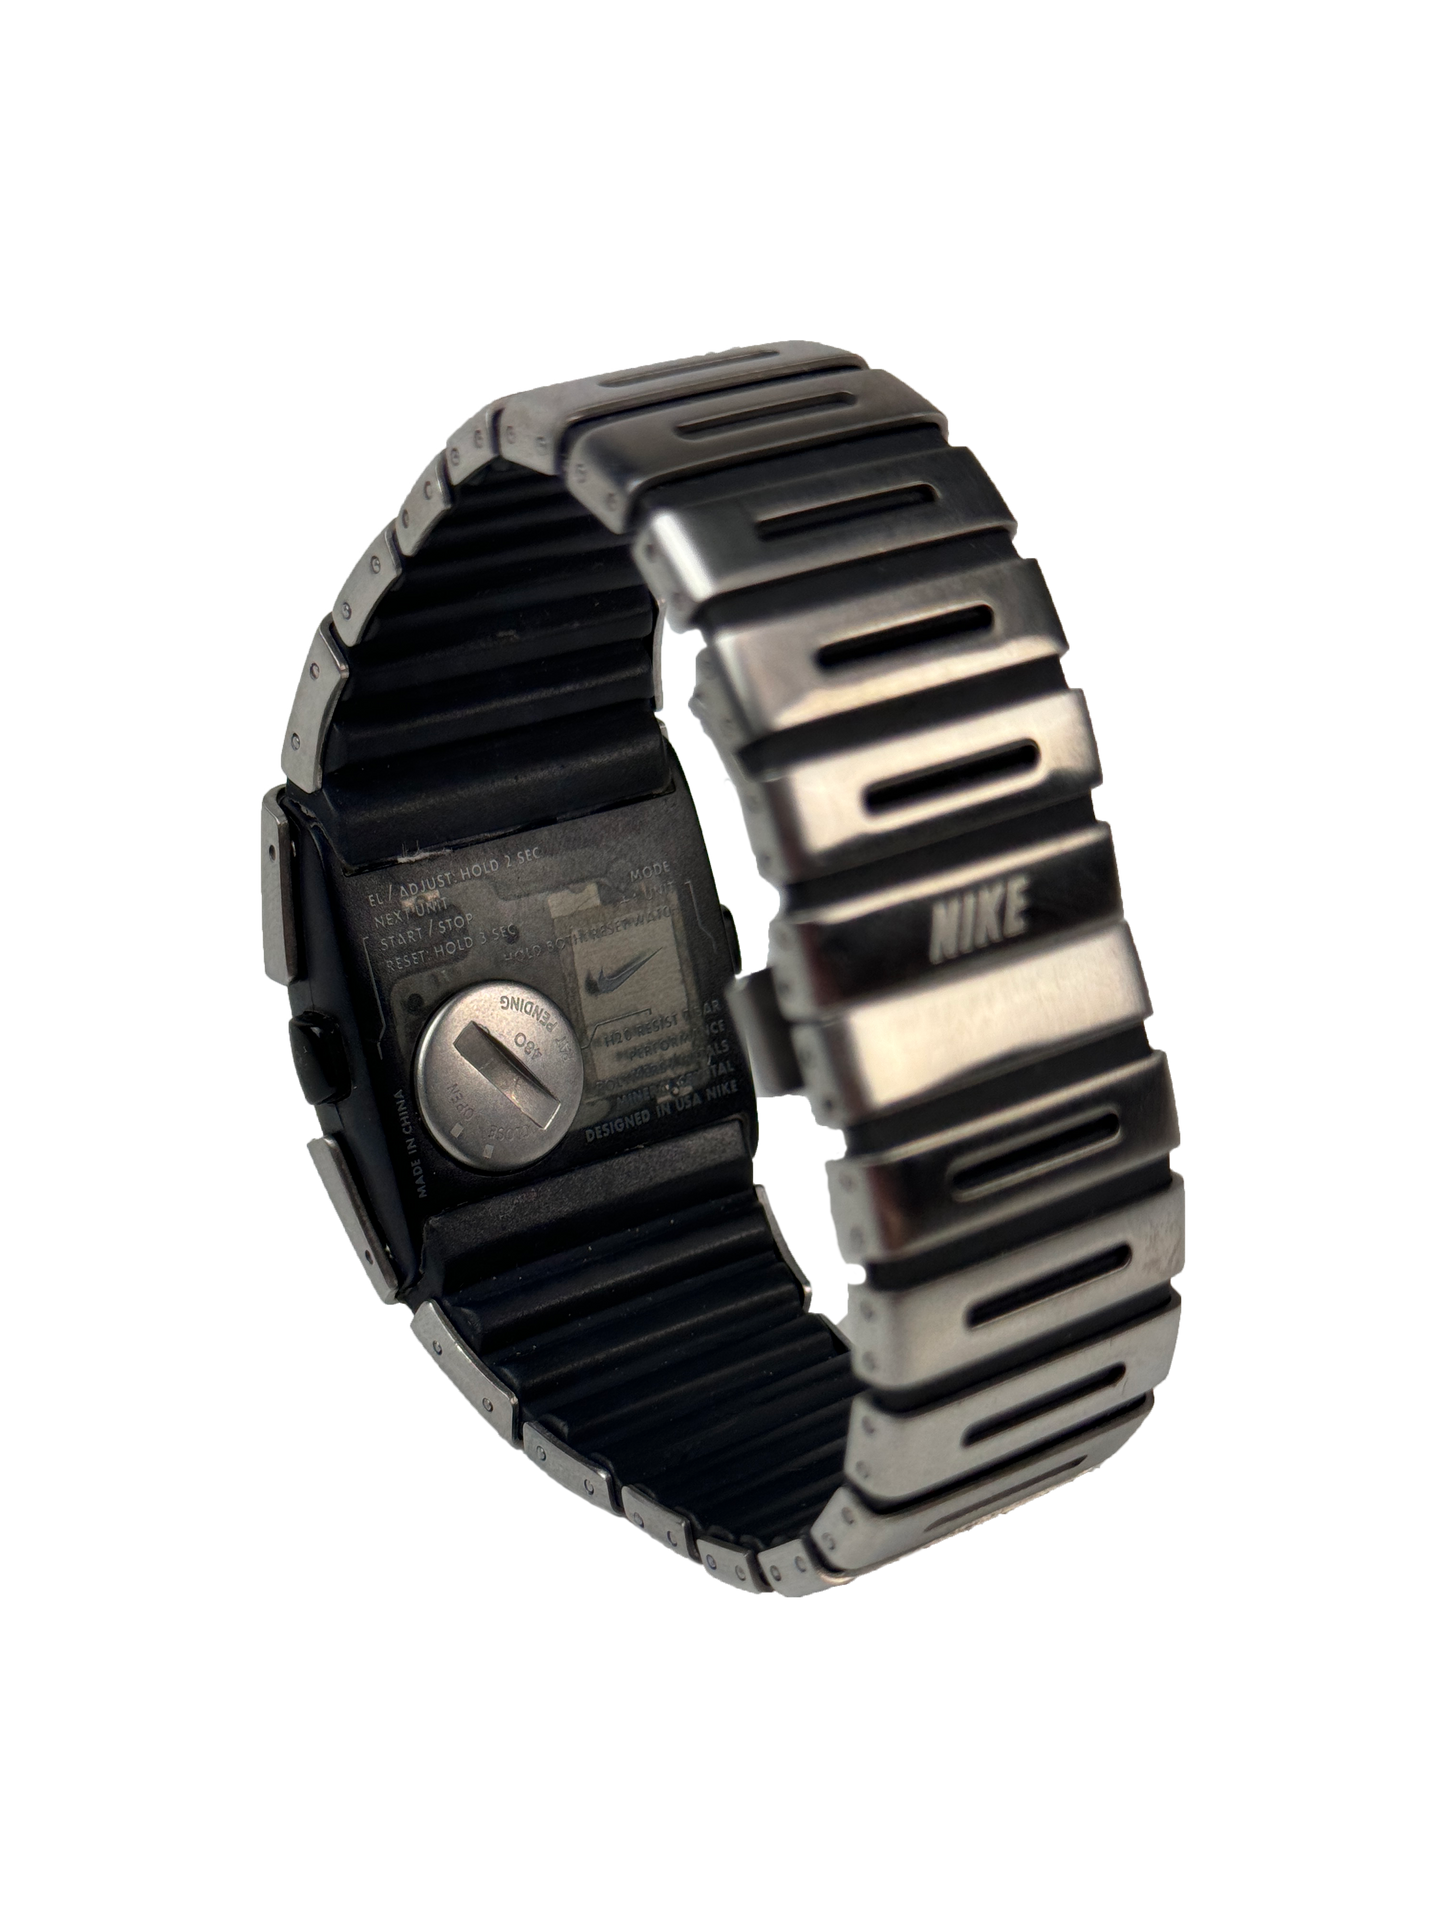 2002 Nike D-Line Digital Watch - OS